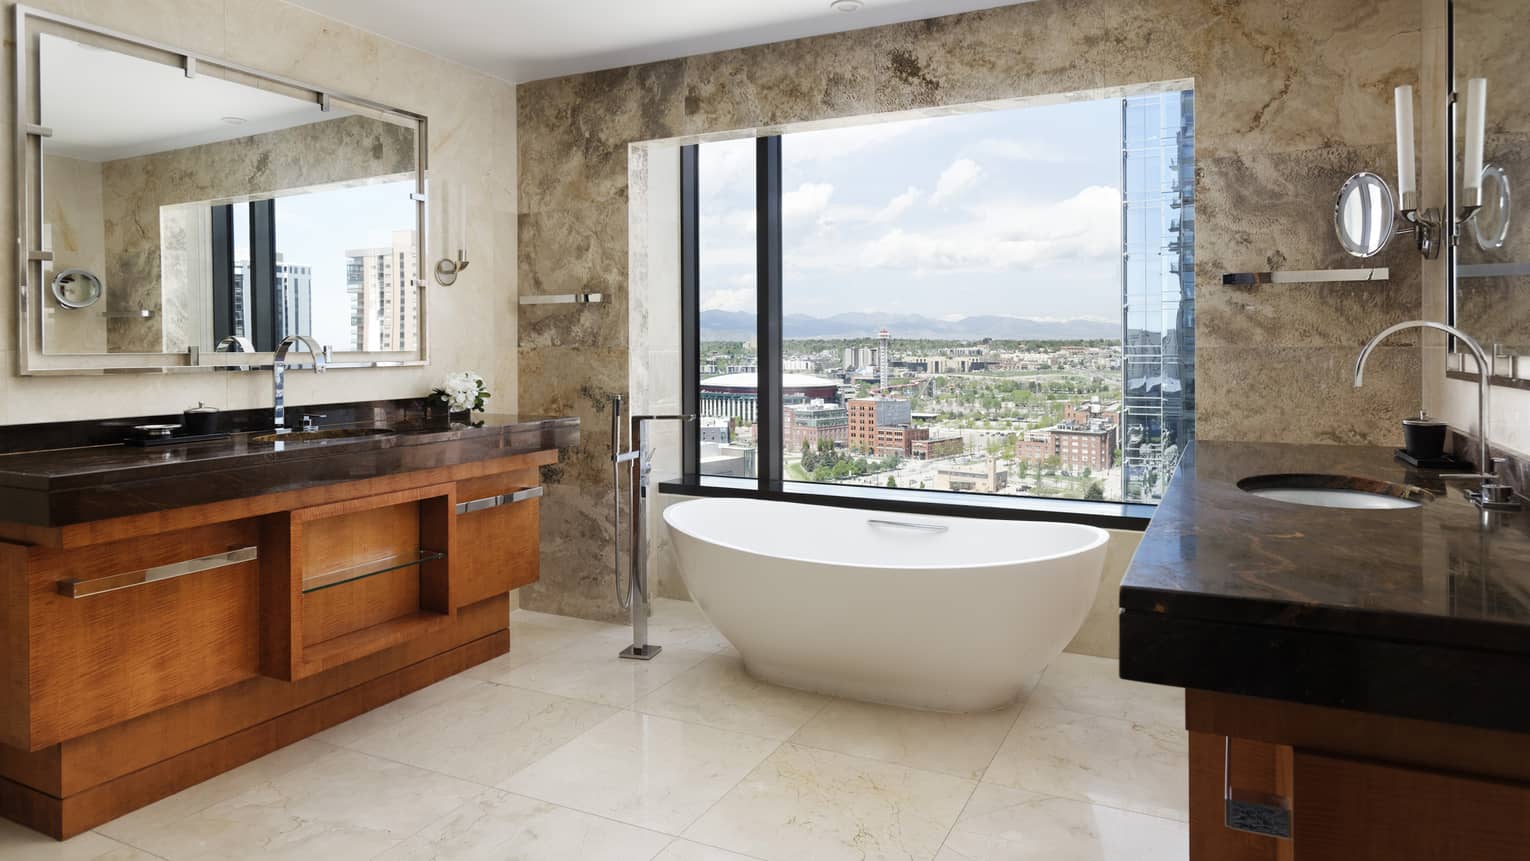 A bathroom with a deep bathtub, large window, and wood and dark stone sink.